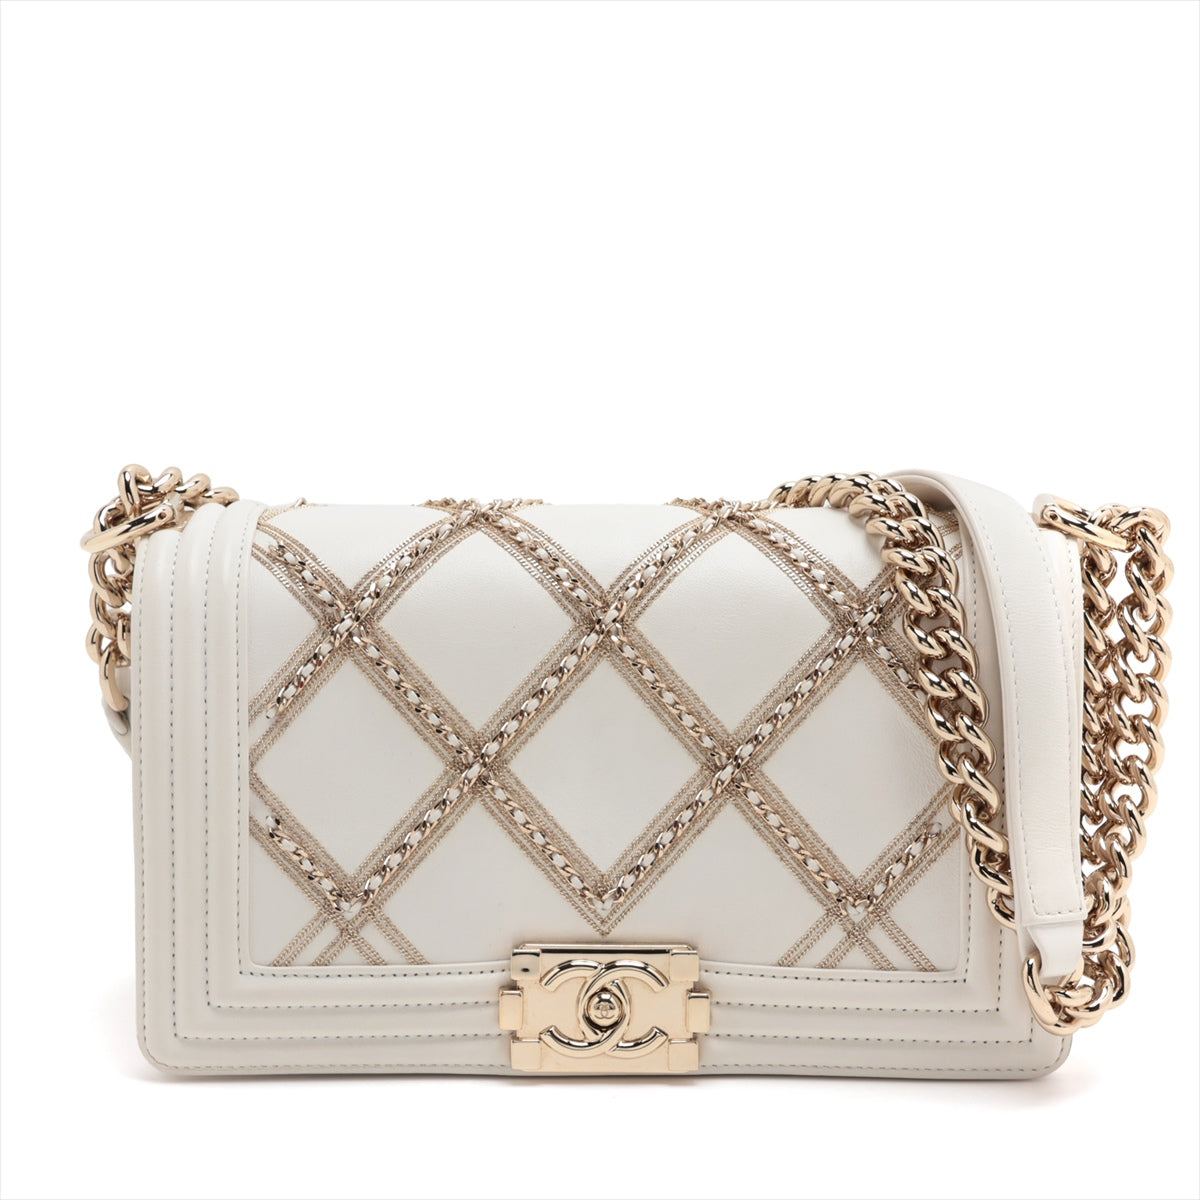 Chanel BOY CHANEL 25 Lambskin Chain Shoulder Bag White Gold Metal Fittings A67086